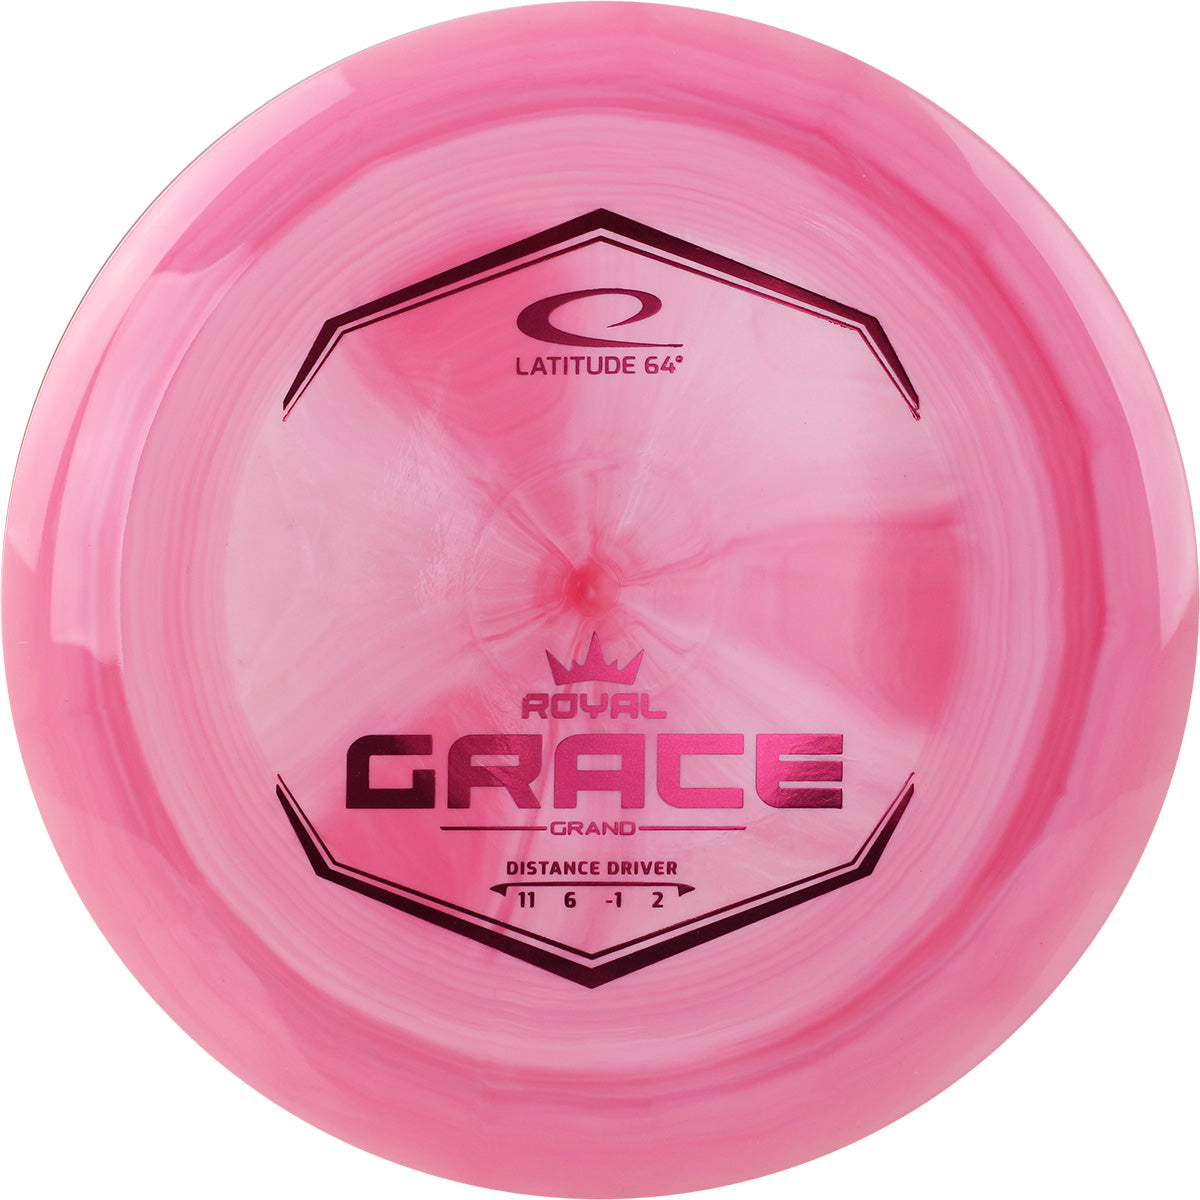 Grand Grace (6587917598785)